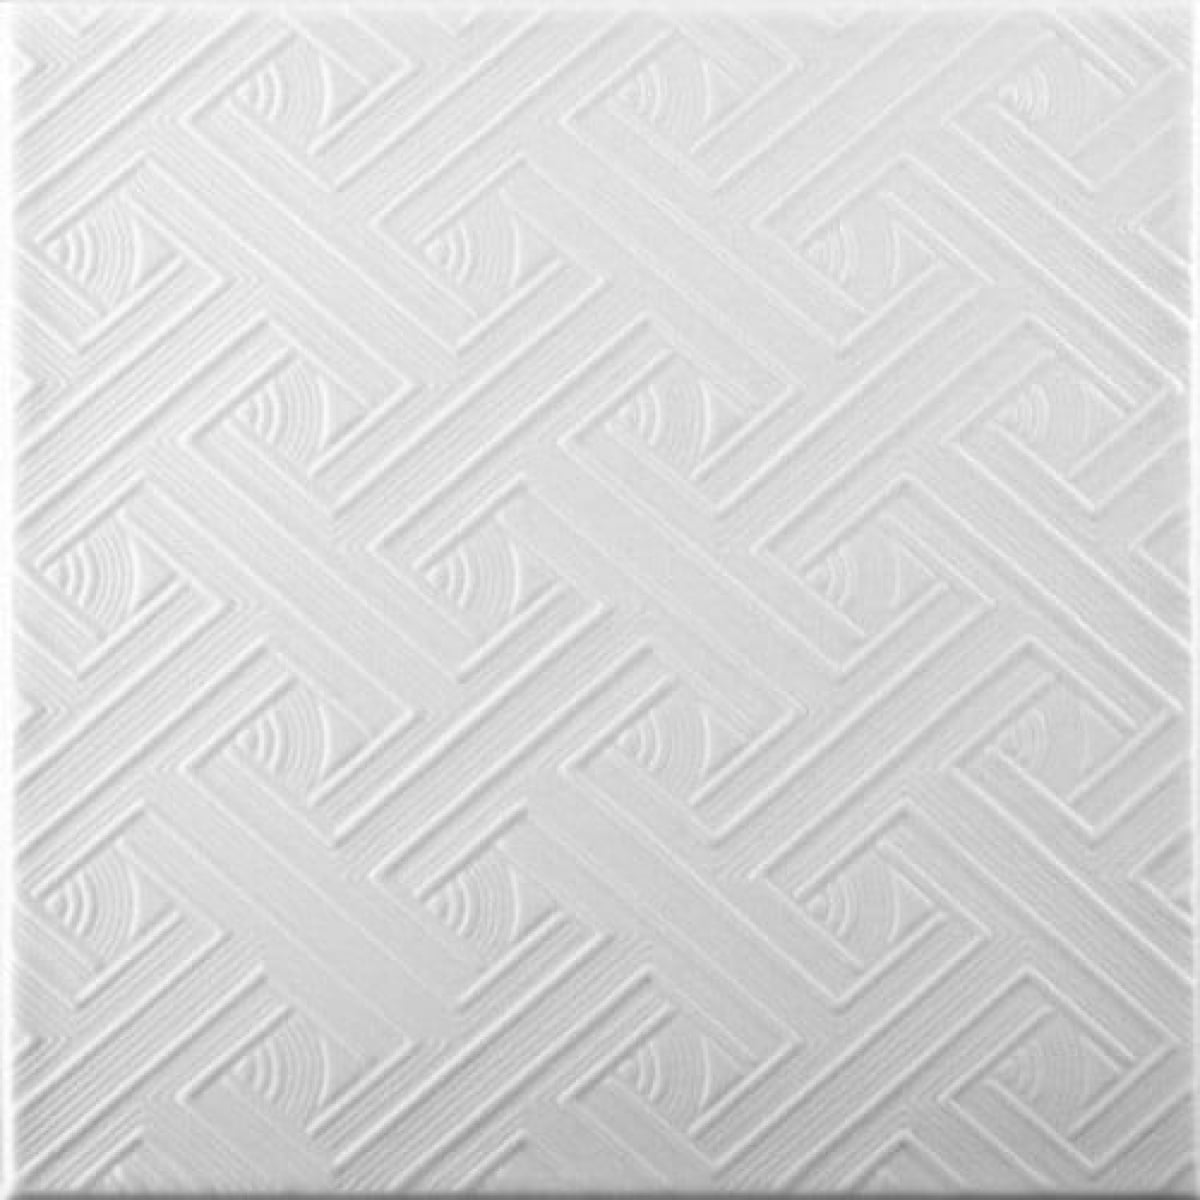 Earth Slime basic Tavan fals decorativ, din polistiren extrudat, alb, 50 x 50 cm, 08-109, 2mp/ pachet • Silvesrom • Materiale de Constructii Barlad